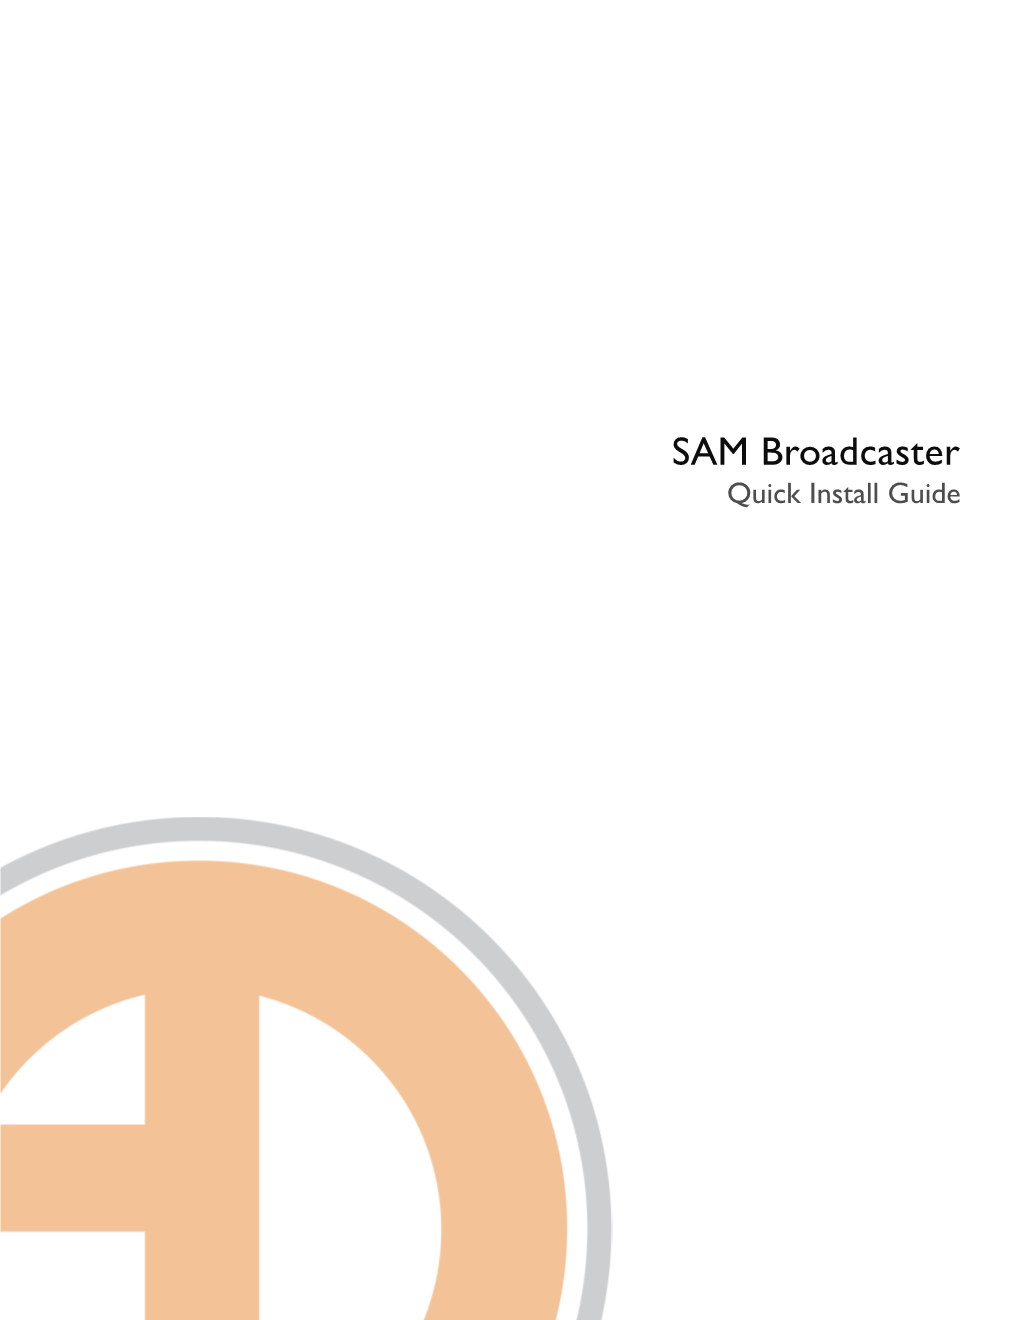 SAM Broadcaster Quick Install Guide